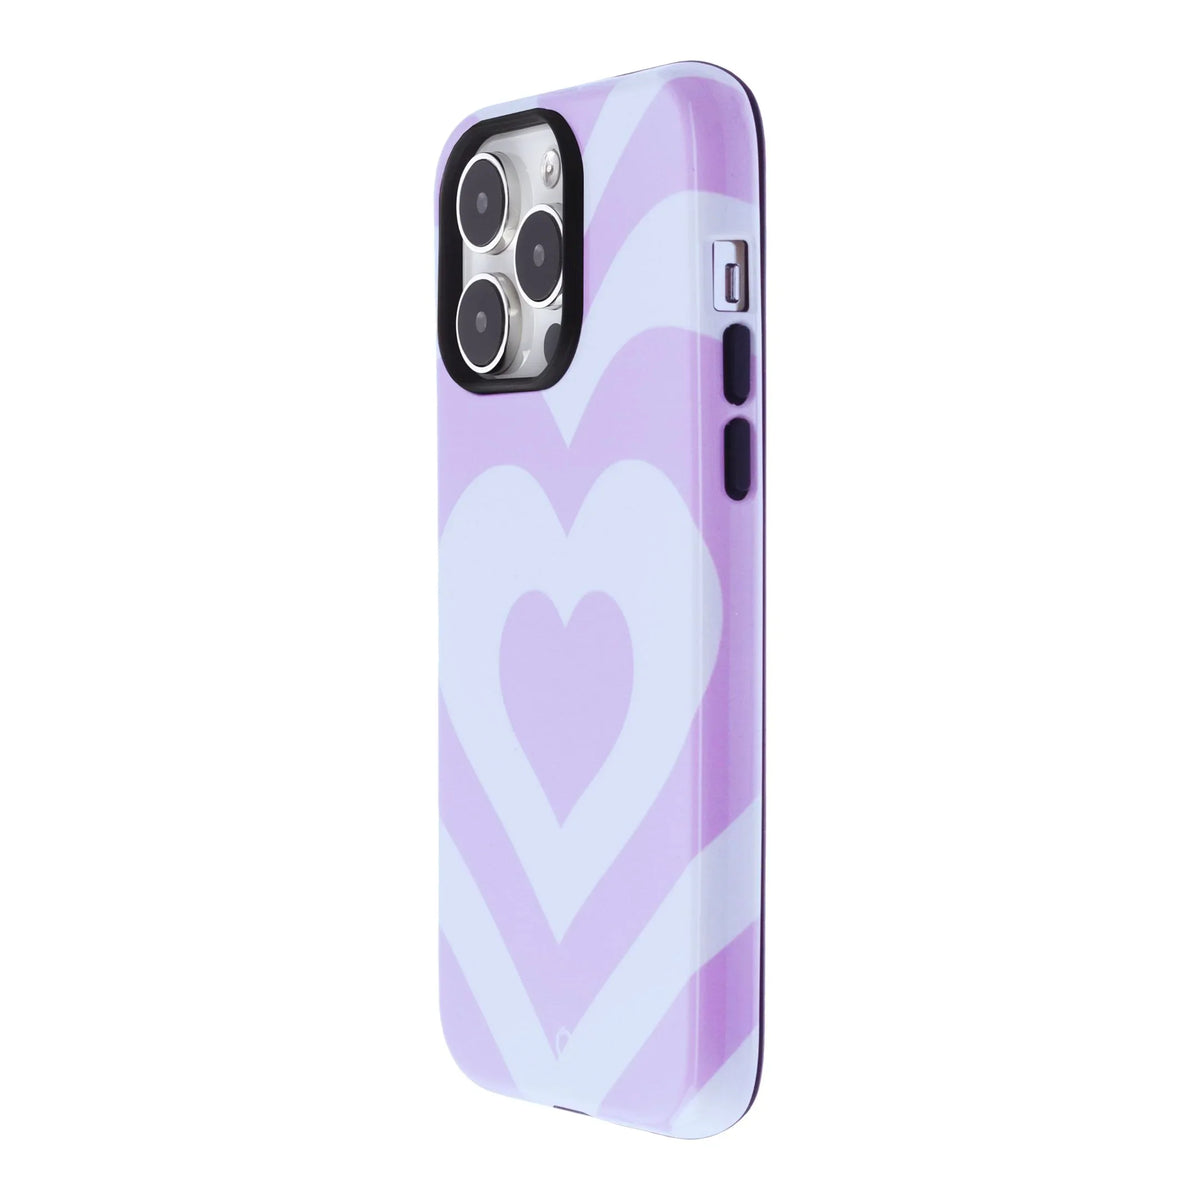 Purple Heartbeat iPhone Case - iPhone 11 Pro Max